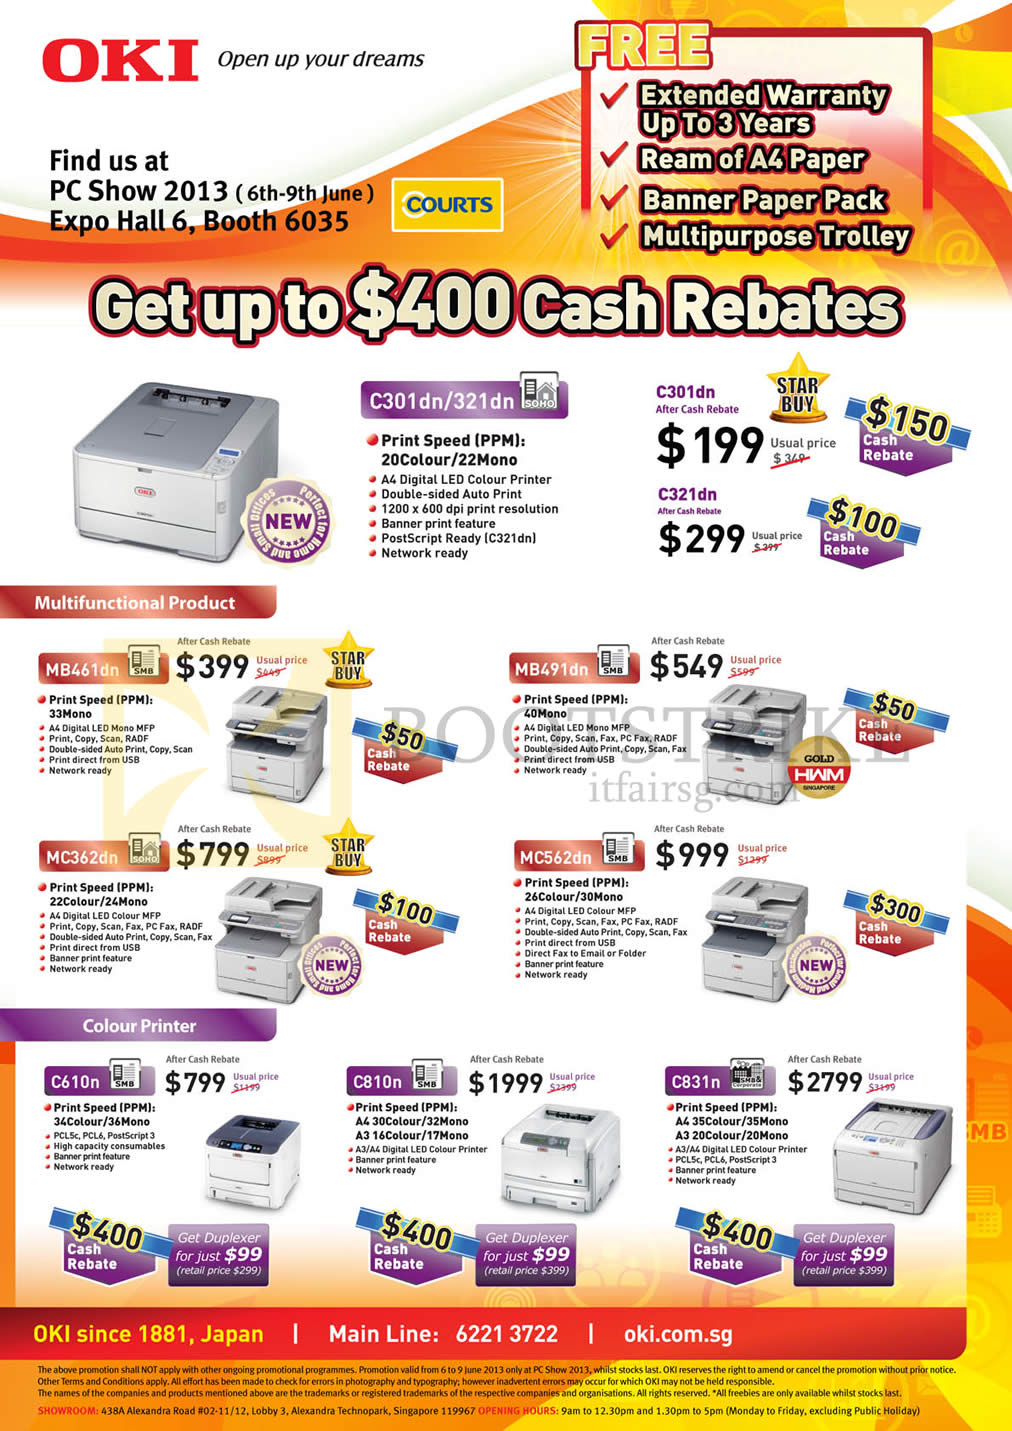 PC SHOW 2013 price list image brochure of OKI (Courts B6035) Printers Digital LED C301dn C321dn, MB461dn MC362dn MB491dn MC562dn, C610n C810n C830n